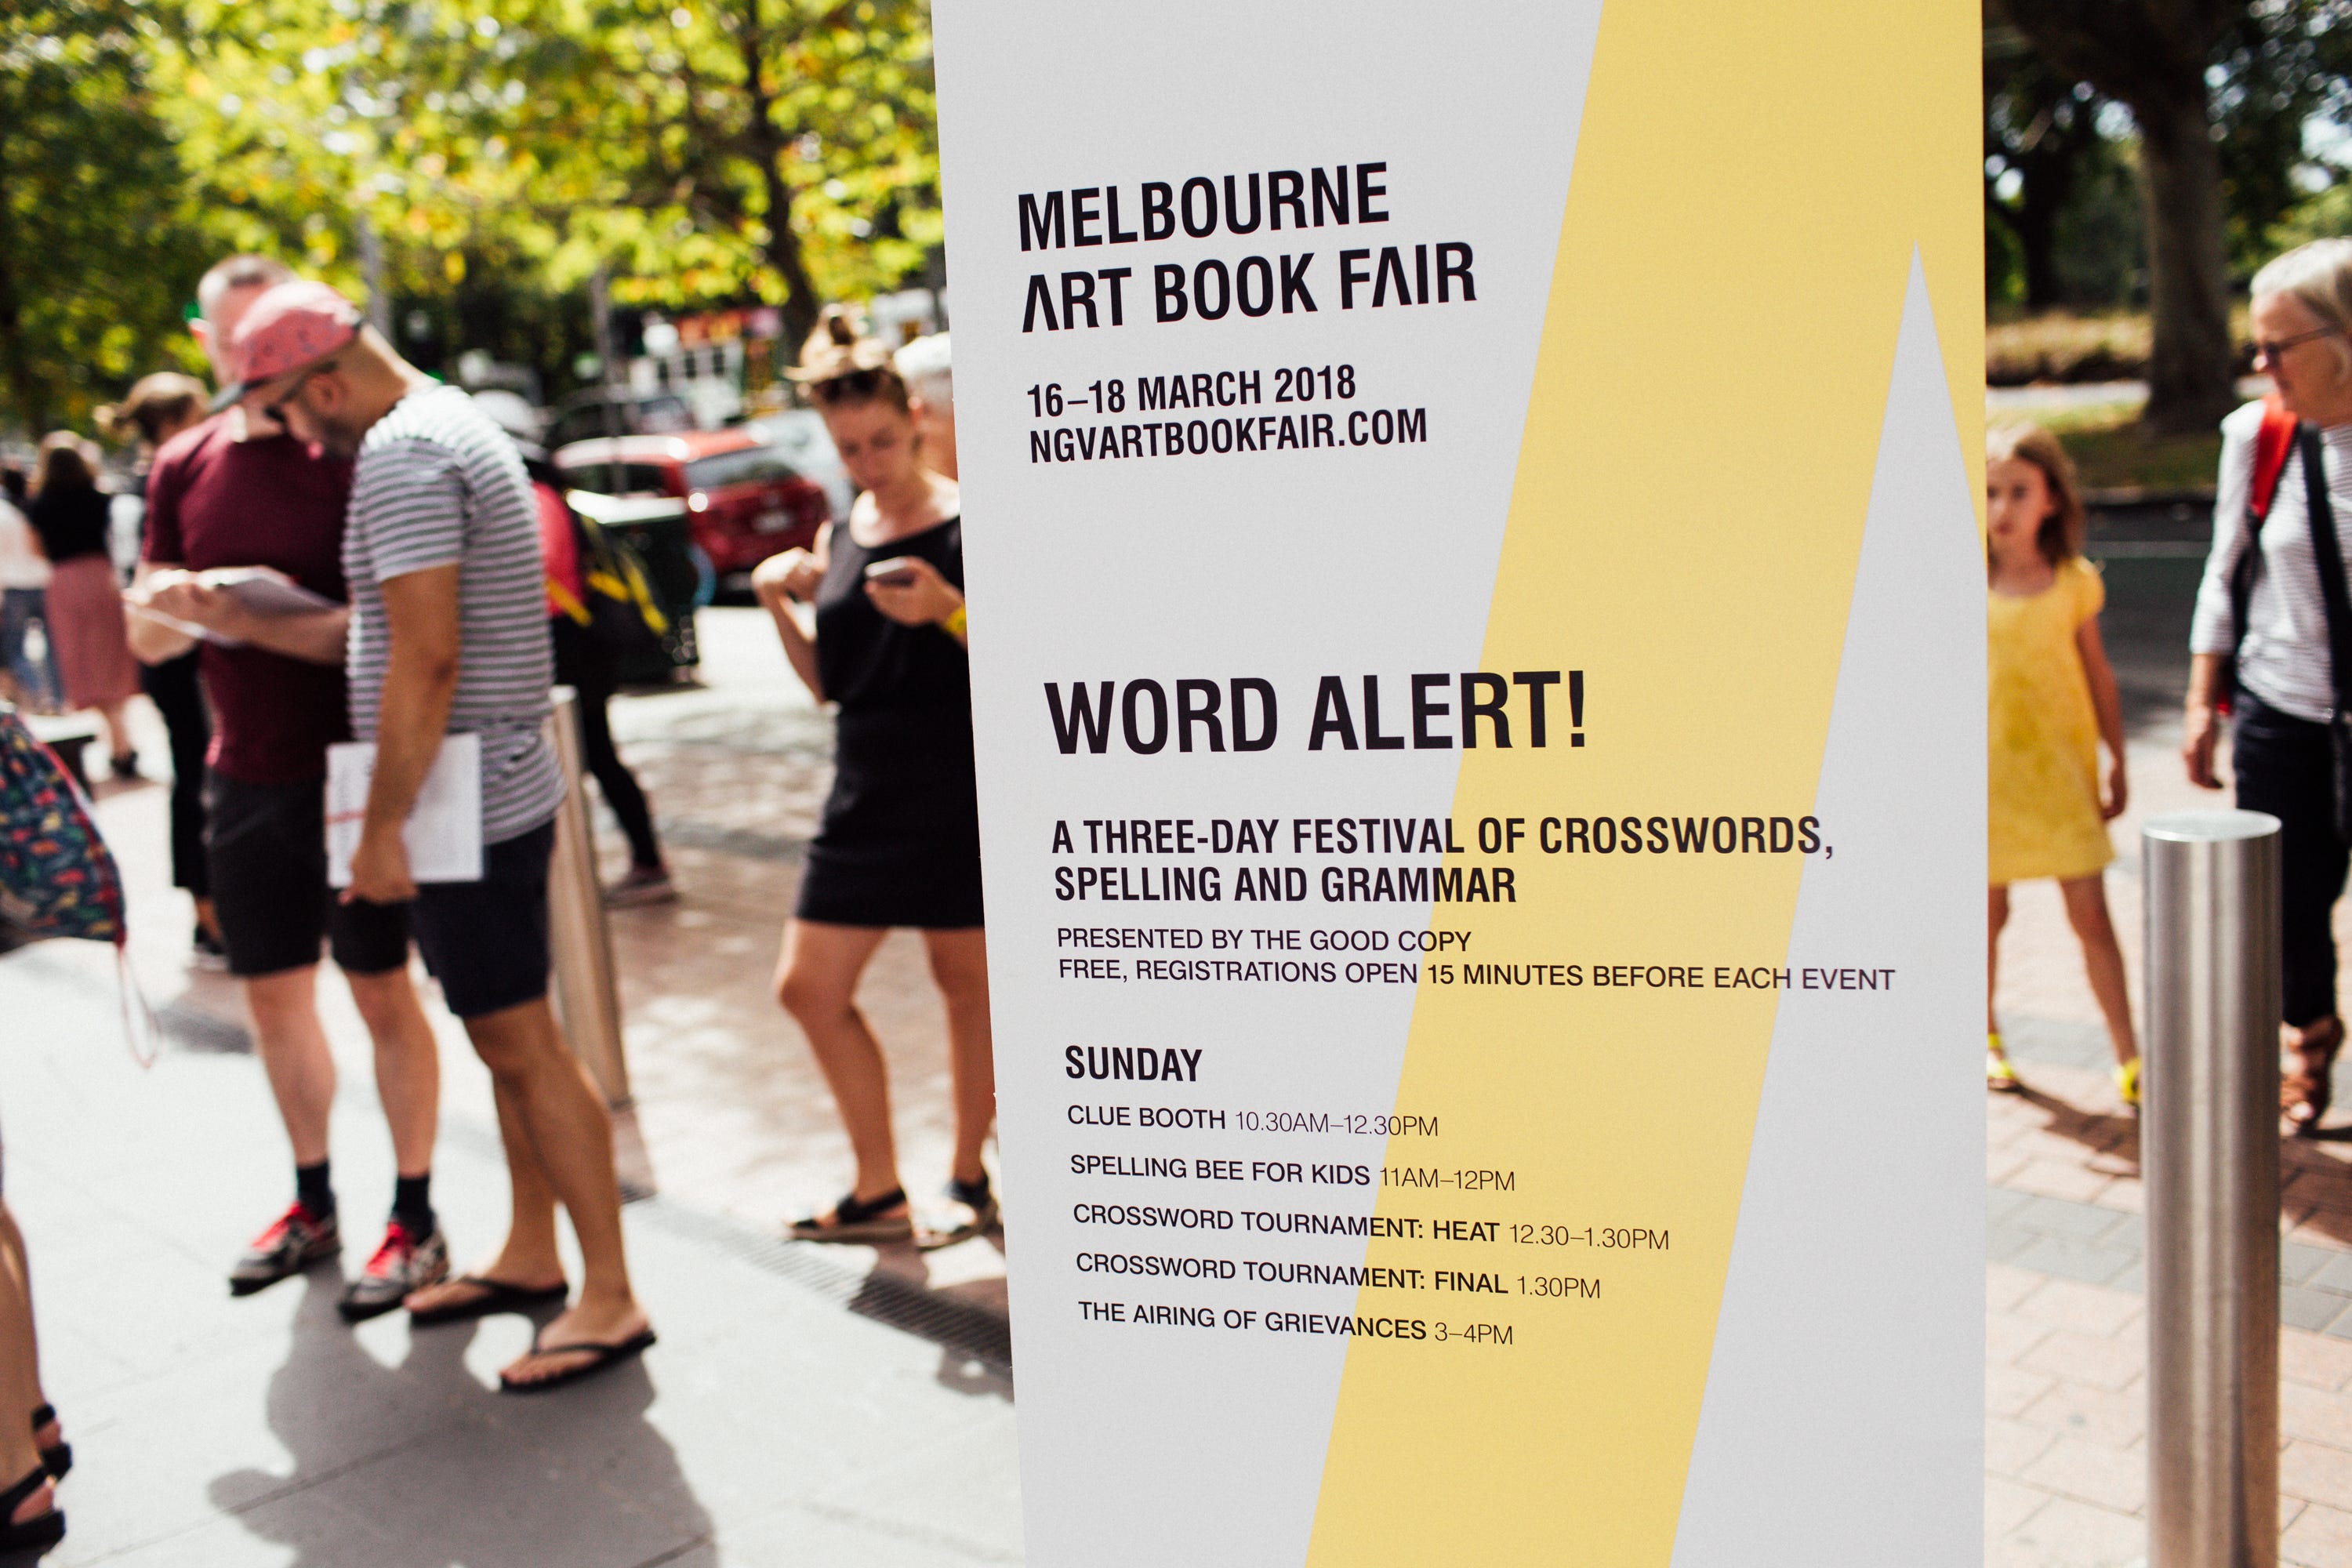 Word Alert At Melbourne Art Book Fair 2018 The Good Copy - 